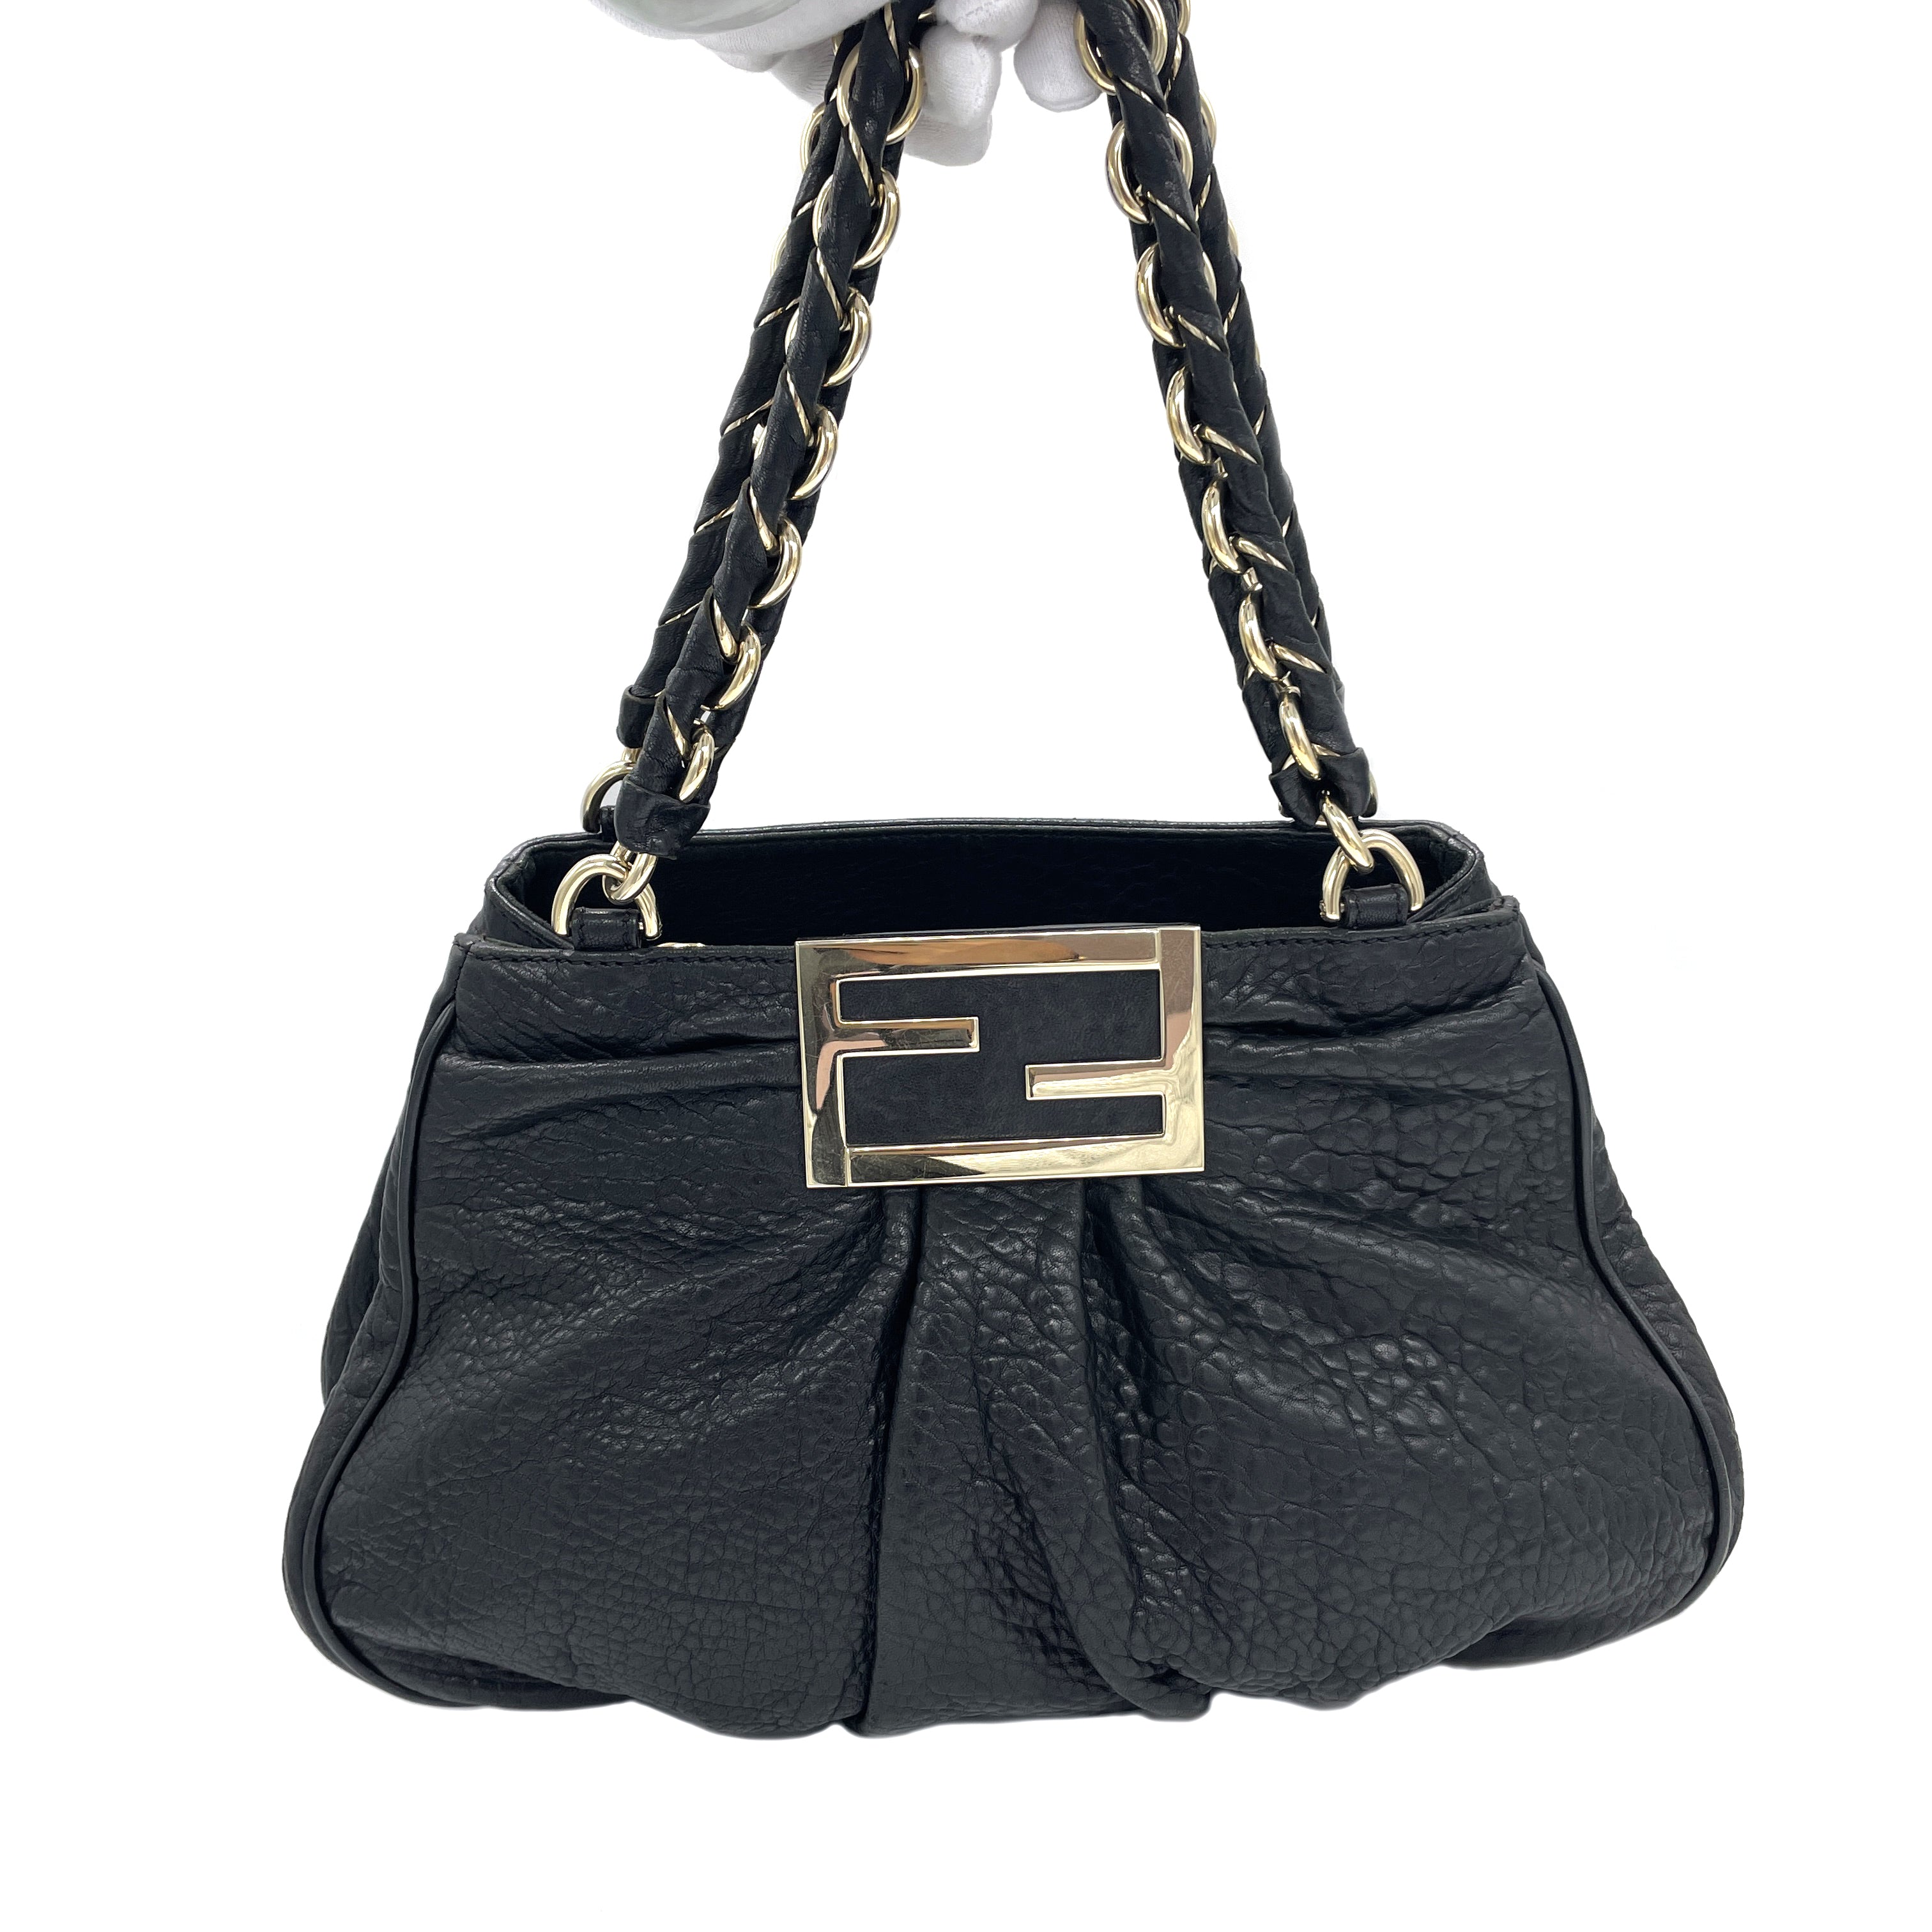 Fendi Mia Leather Handbag Leather Handbag in Excellent condition